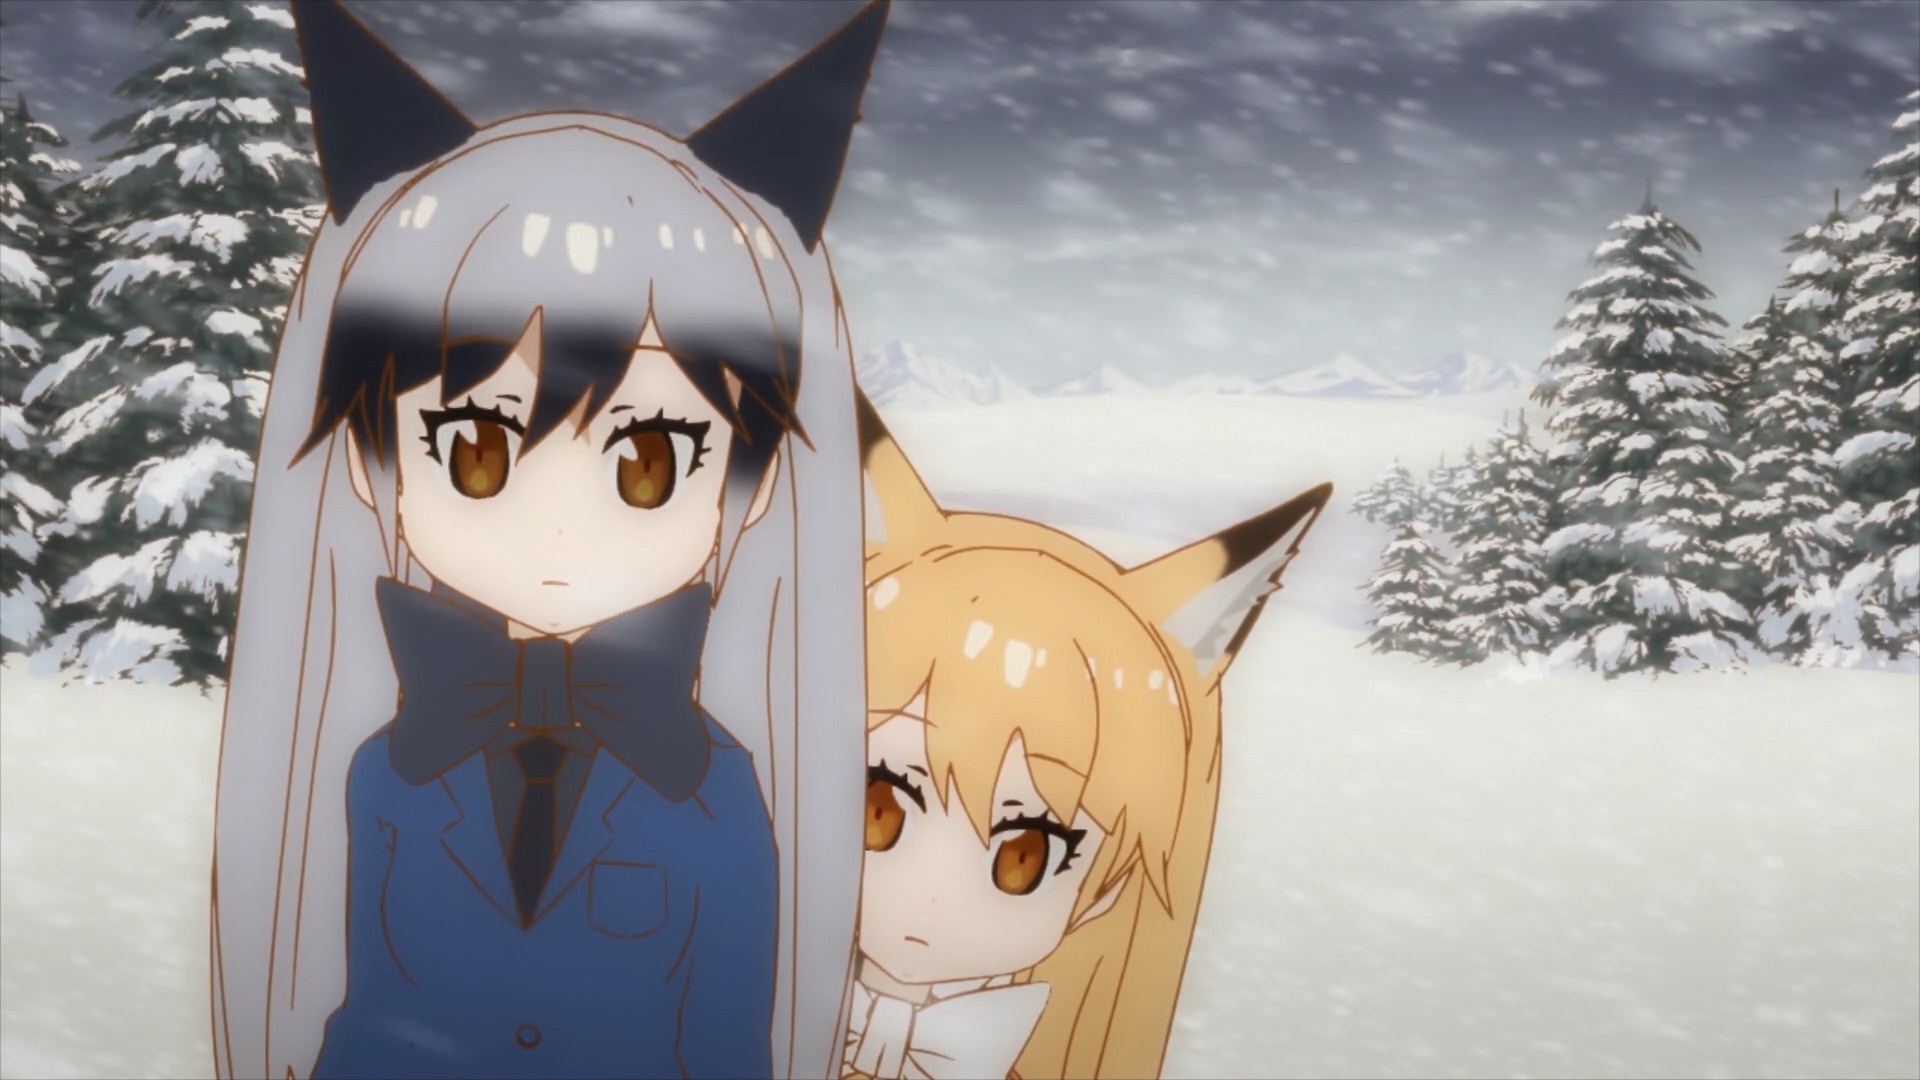 A Snowy Mountain Area in OP from Anime Season 1.